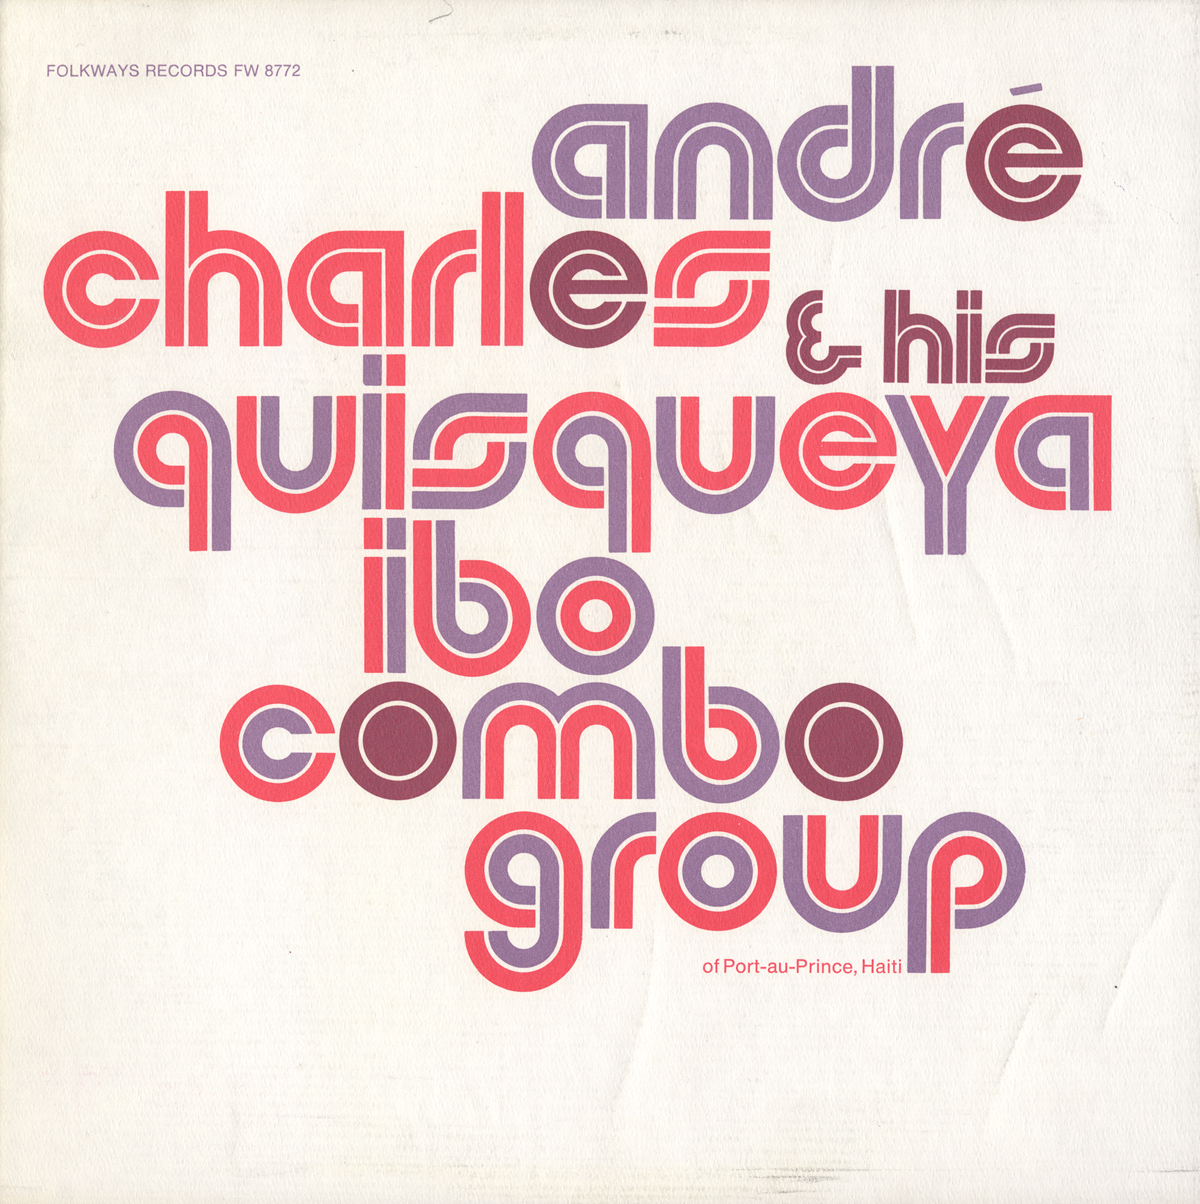 ANDRE CHARLES & HIS QUISQUEYA IBO COMBO GROUP